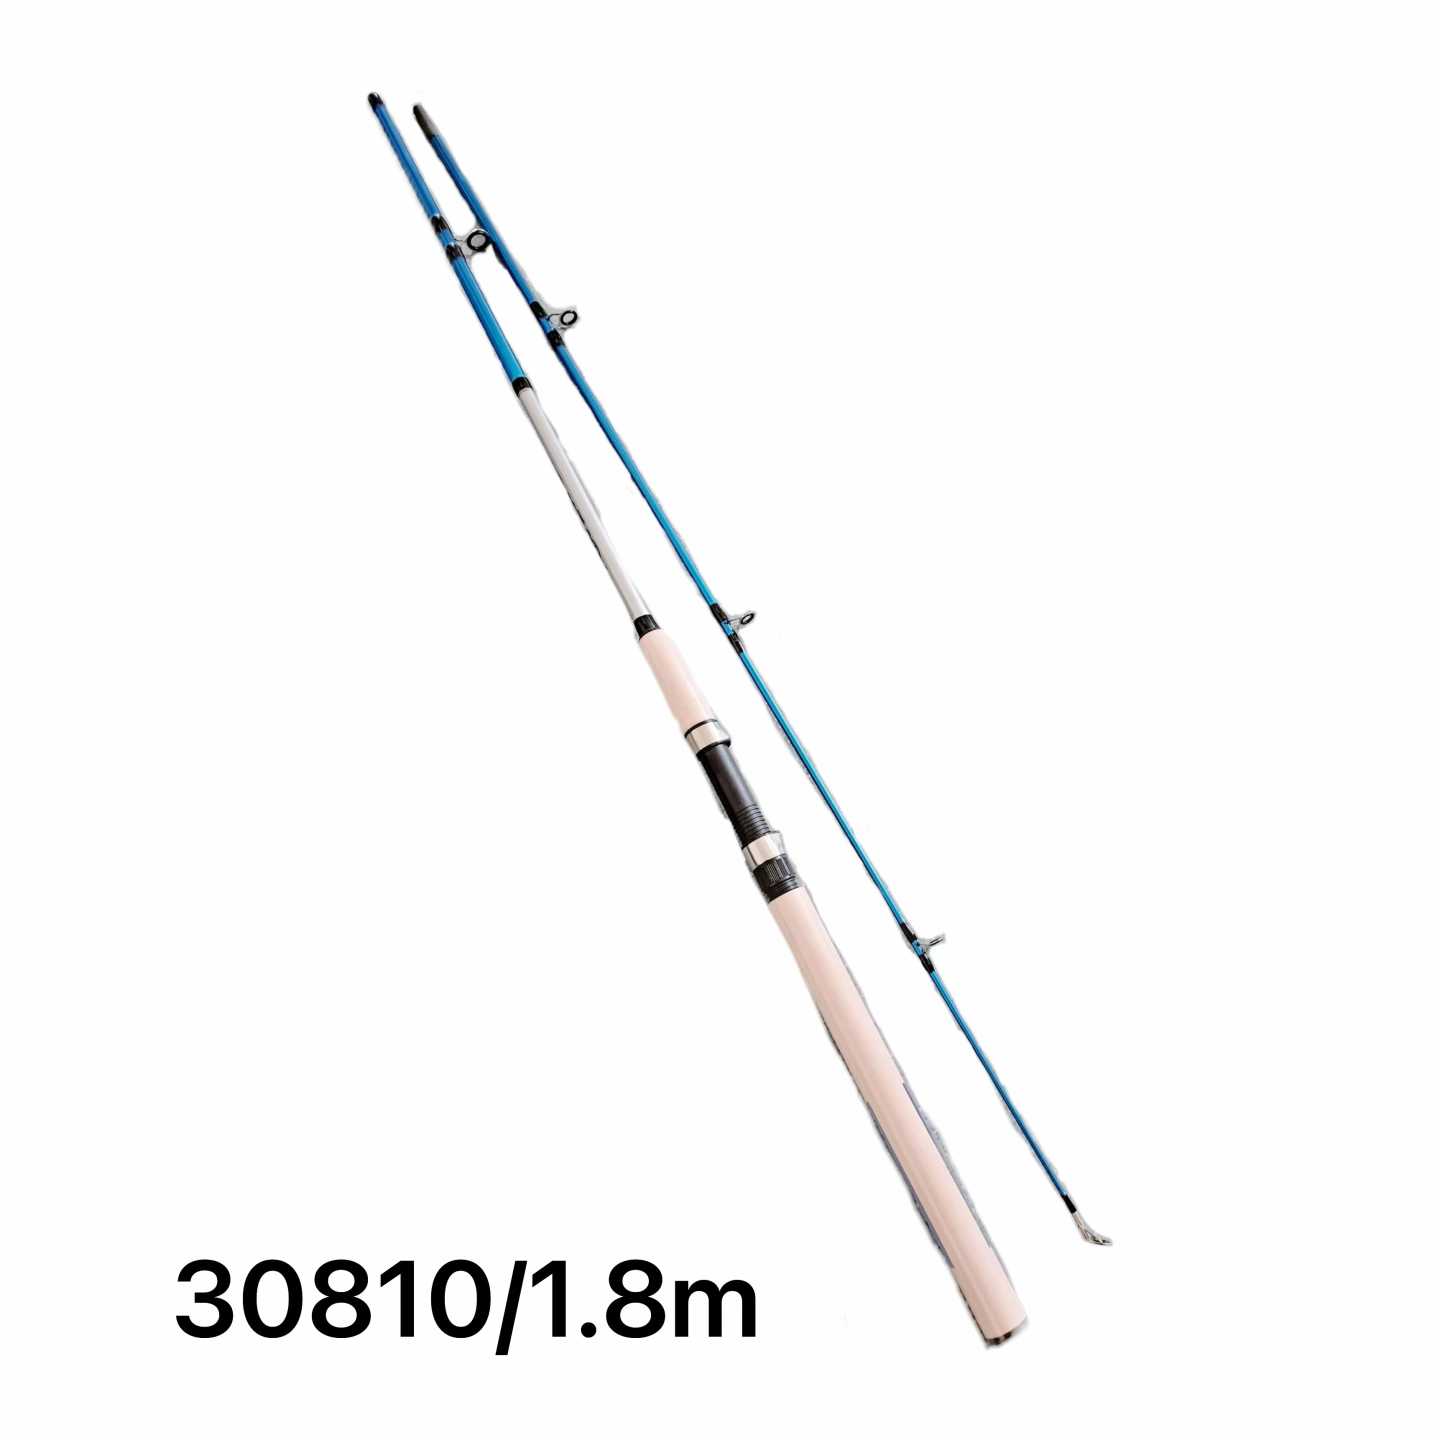 Fishing rod - Split - 1.8m - 30810